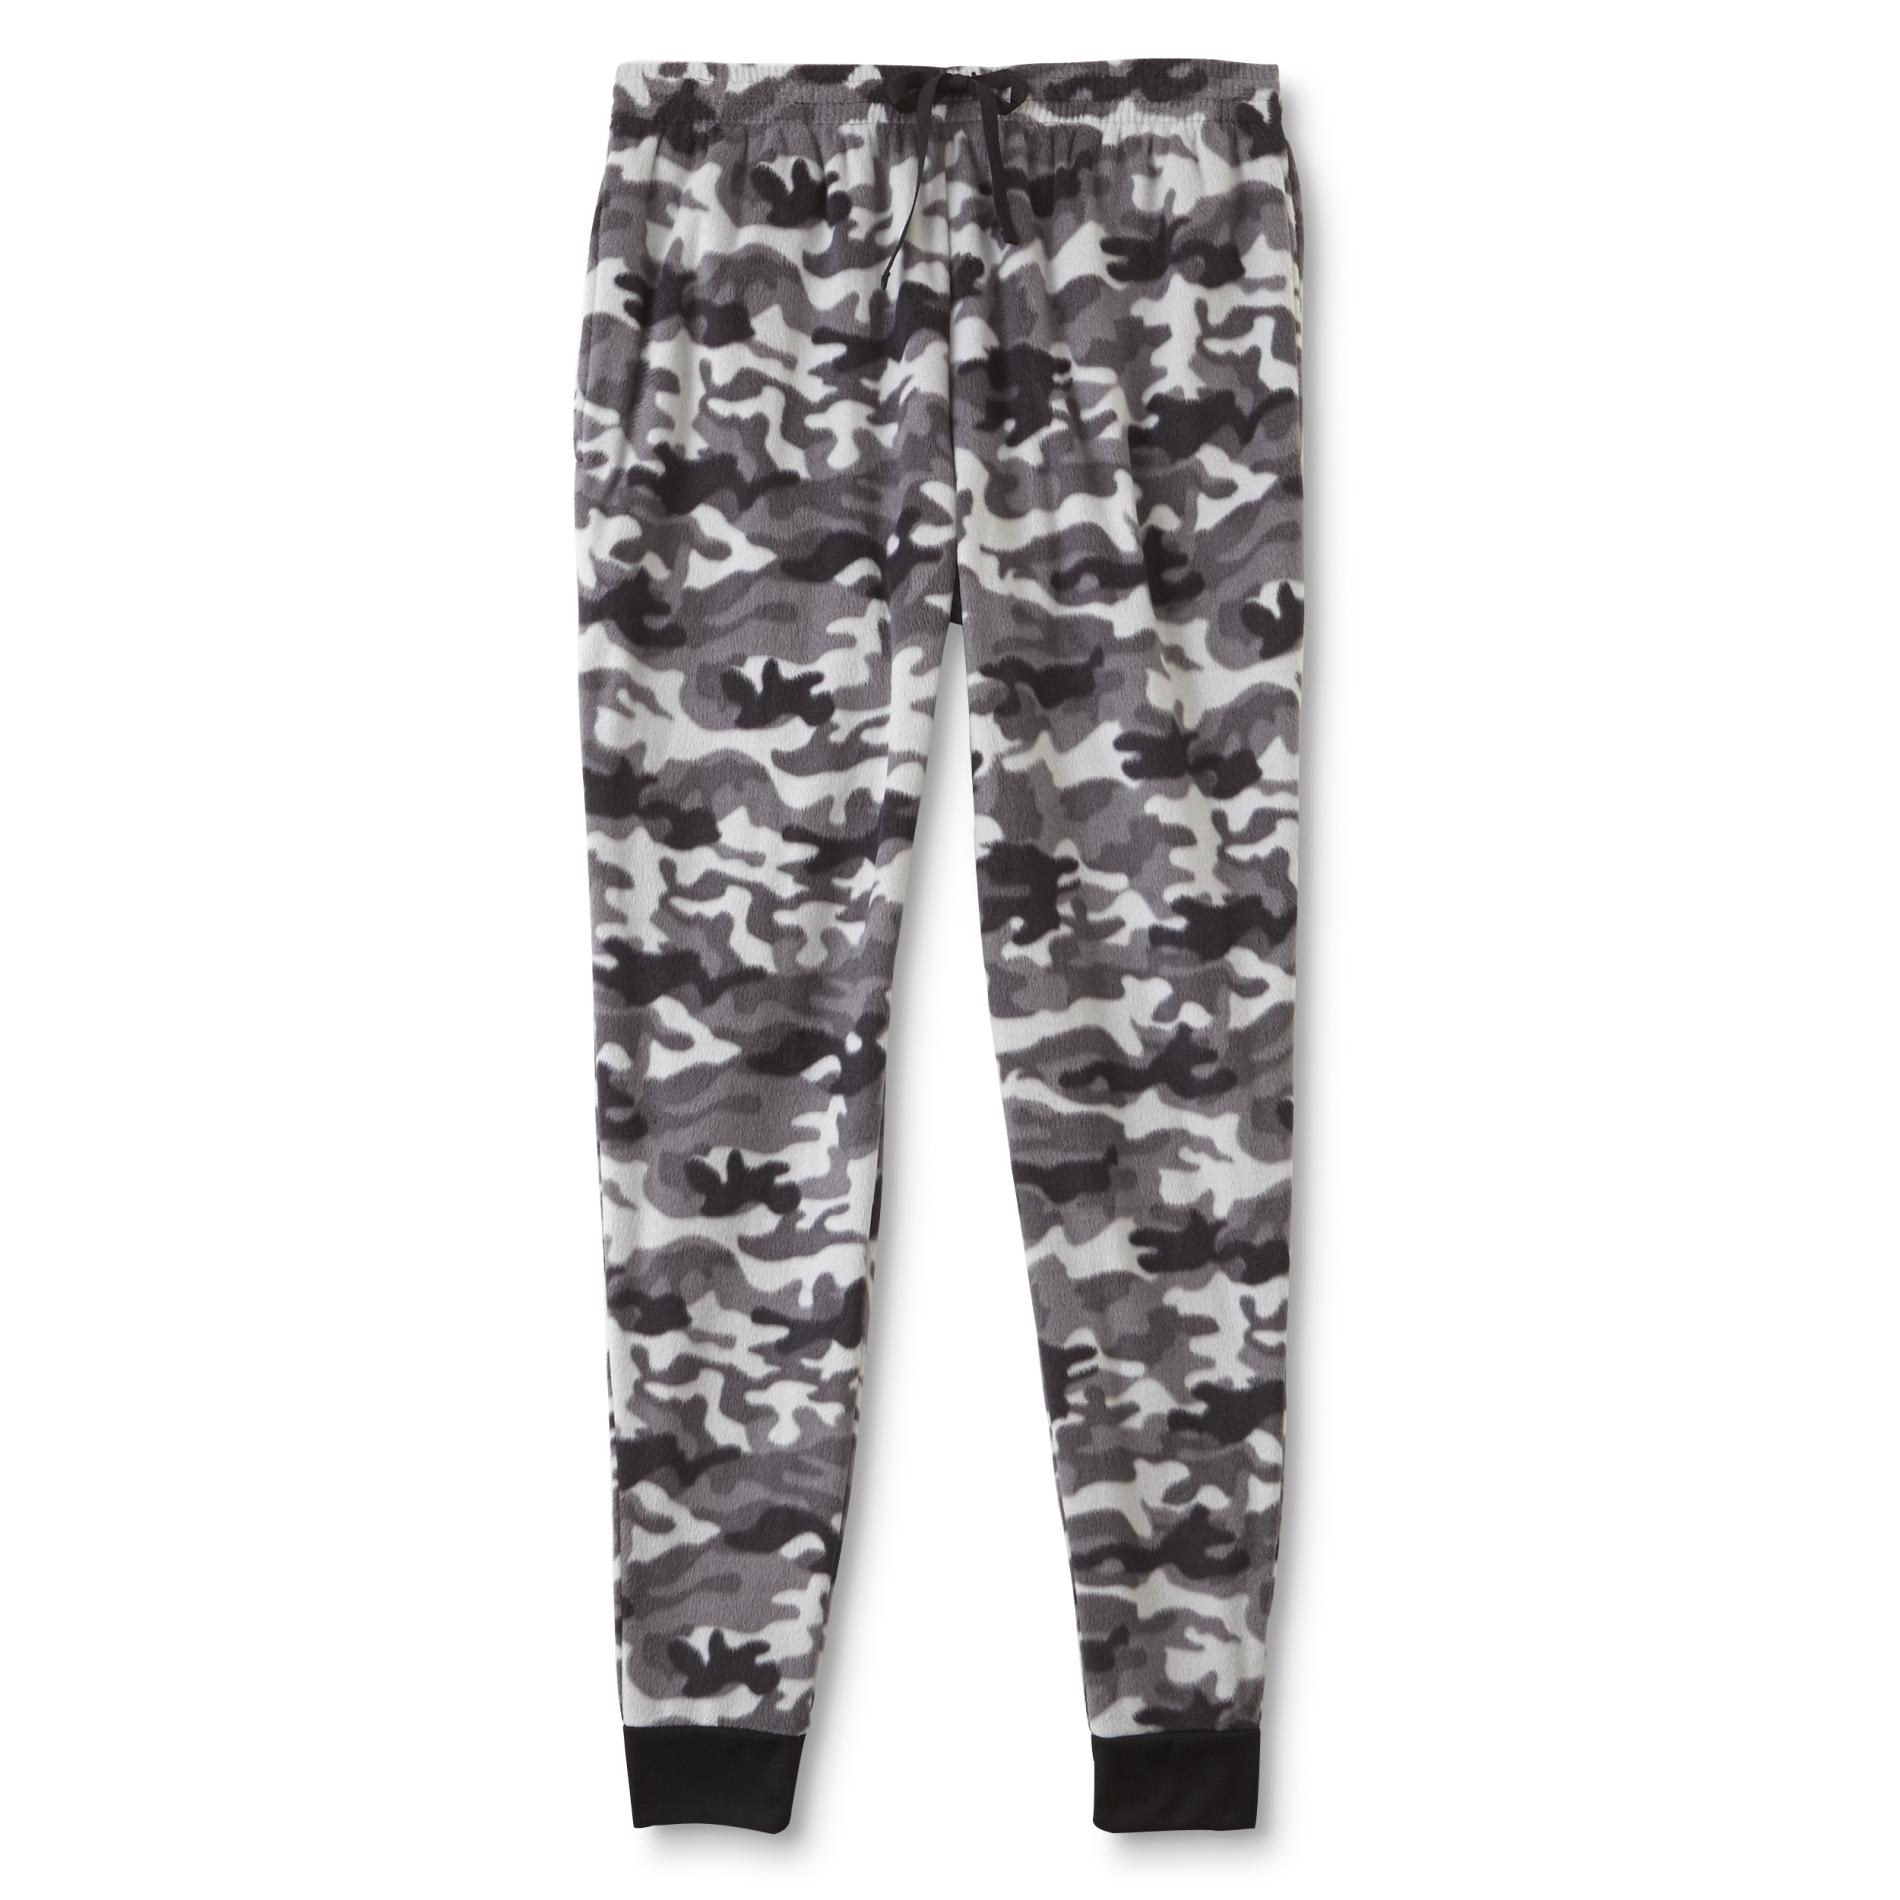 Joe Boxer Men's Fleece Pajama Pants - Camouflage | Shop Your Way ...